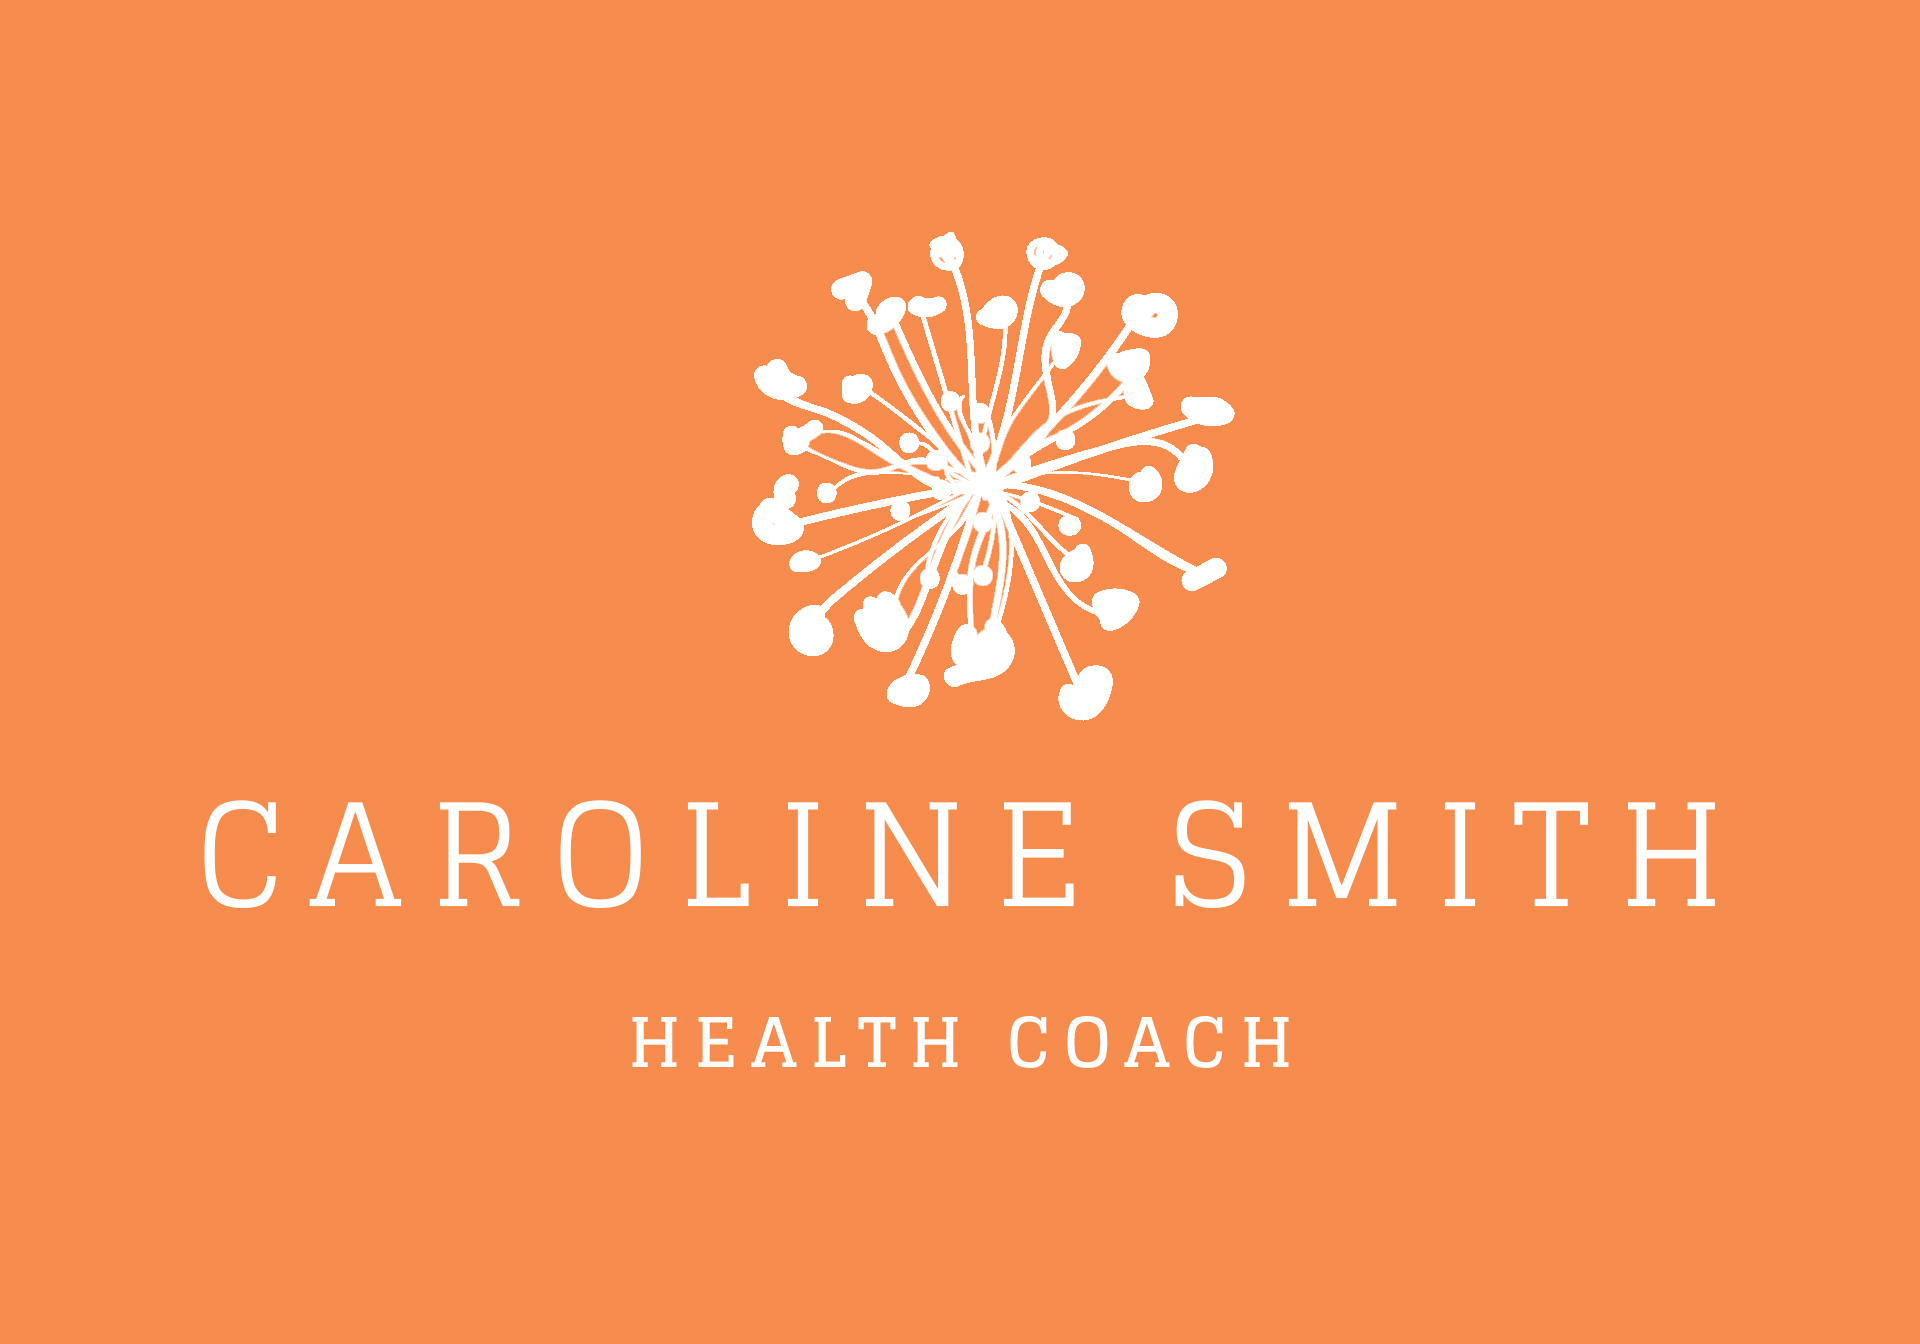 Caroline Smith Health Coach logo, designed by MR.SMiTH